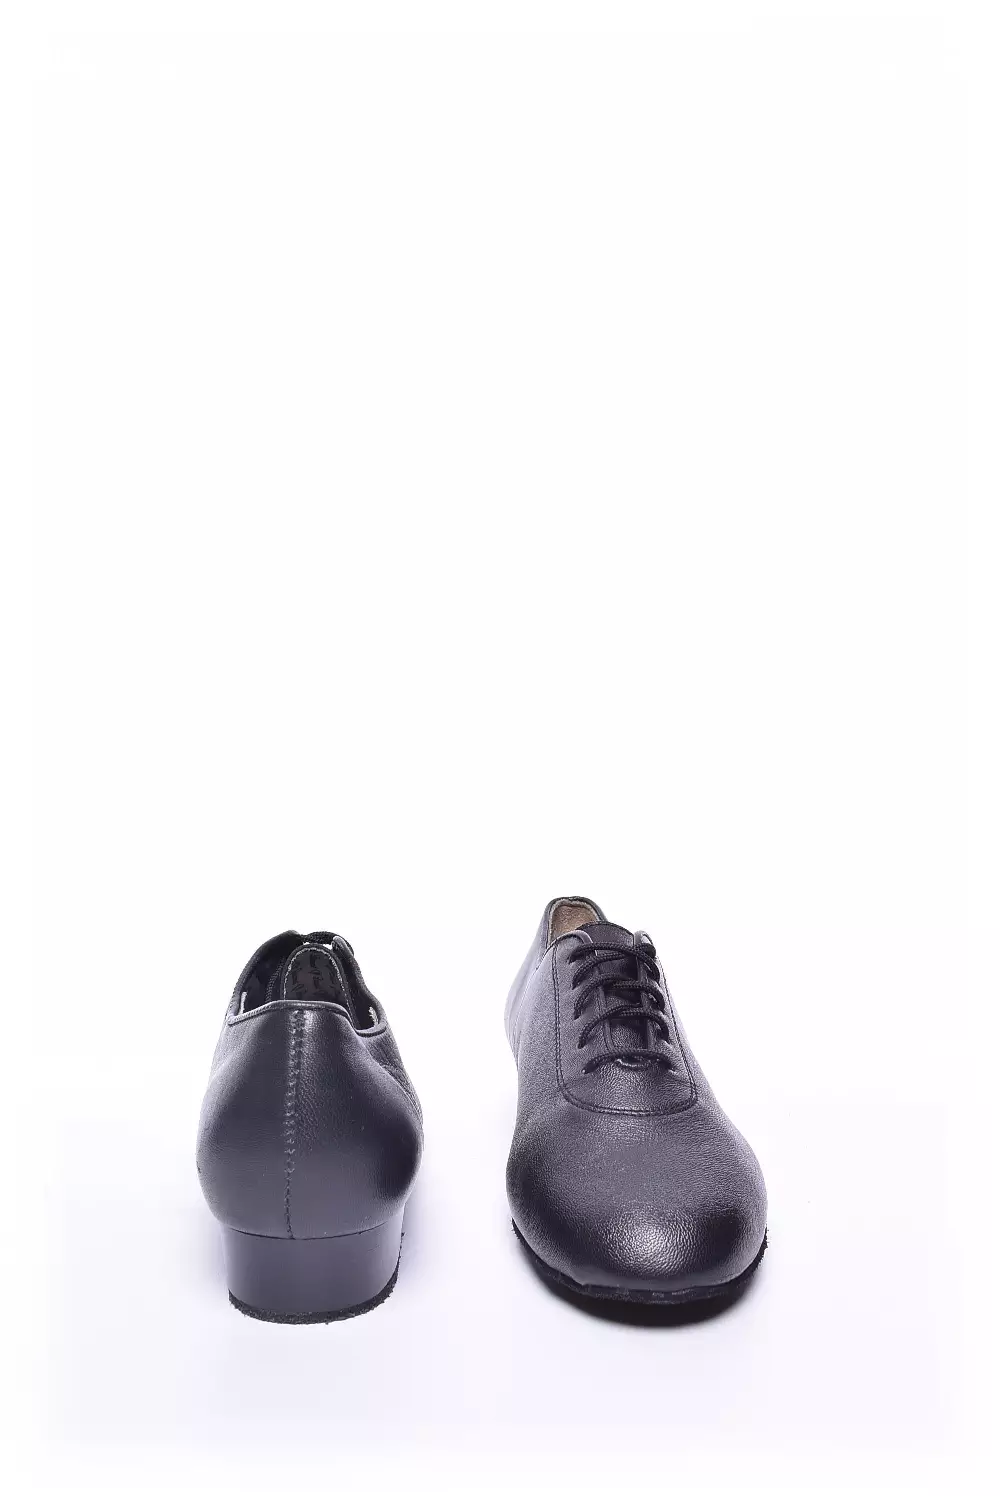 Pantofi pentru dans - Diamant | Shoemix.ro